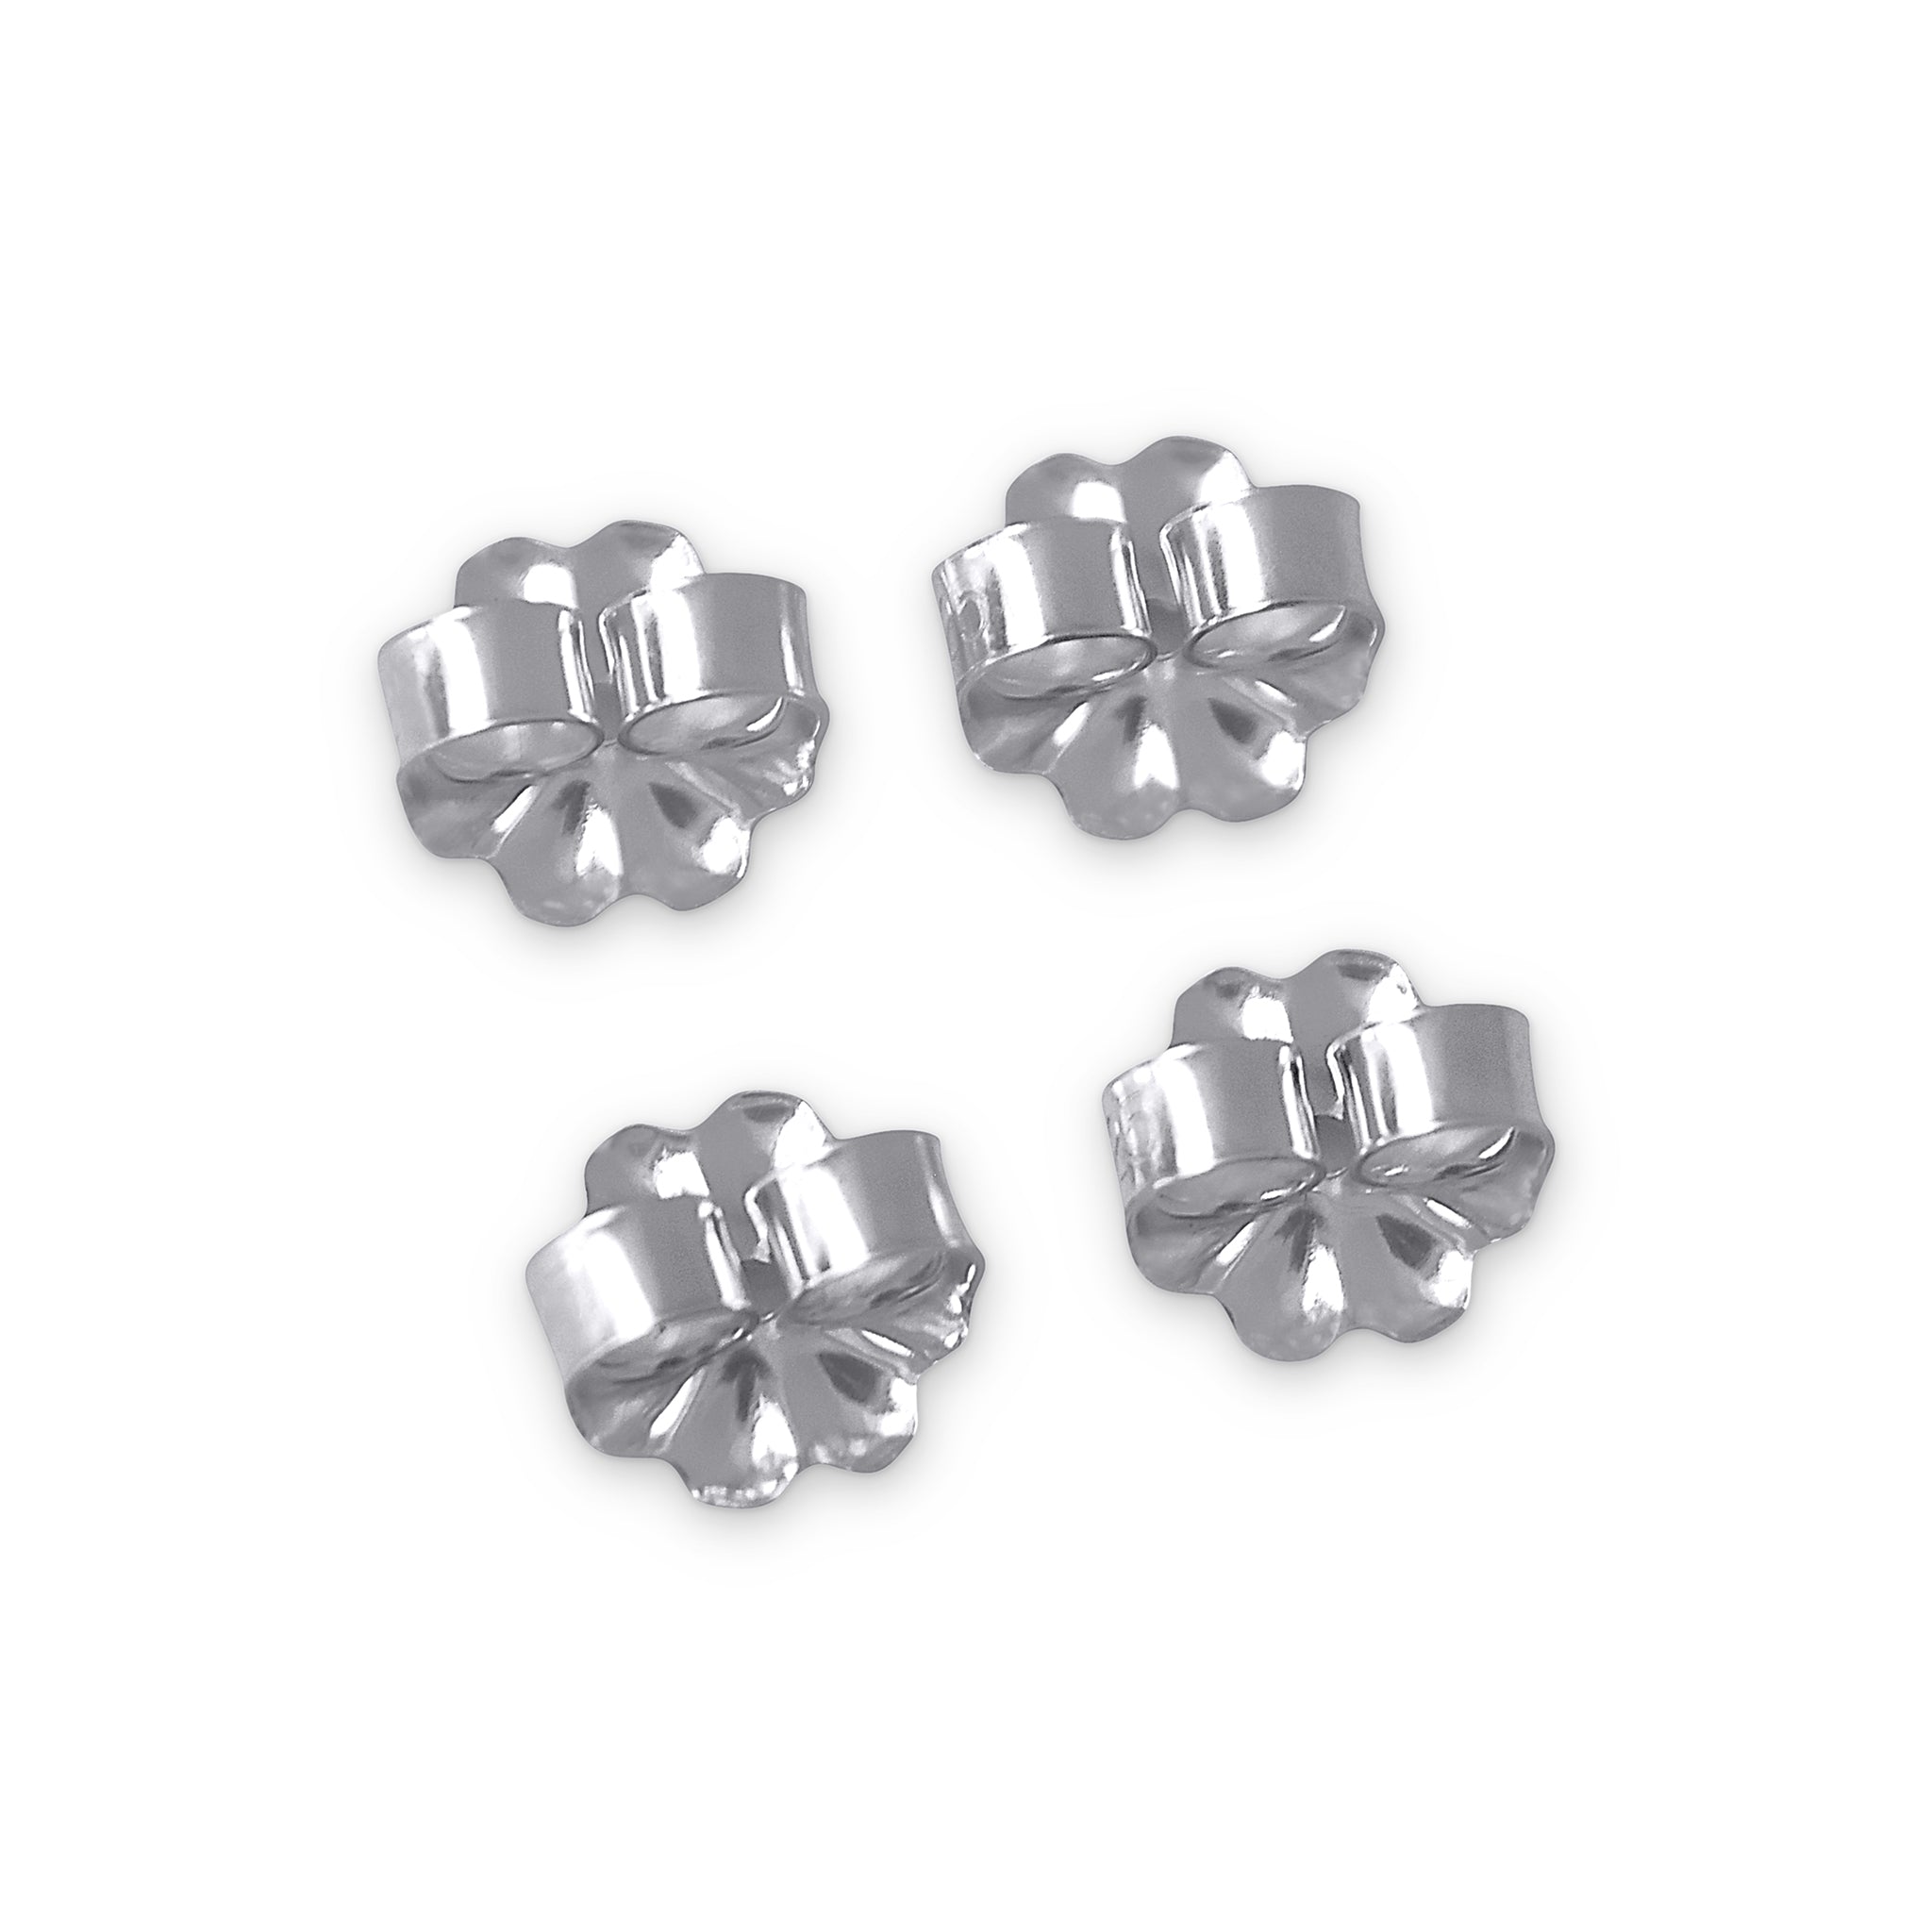 Medium Earring Backs (4.7x5.5mm) Sterling Silver - 10 pcs.-2